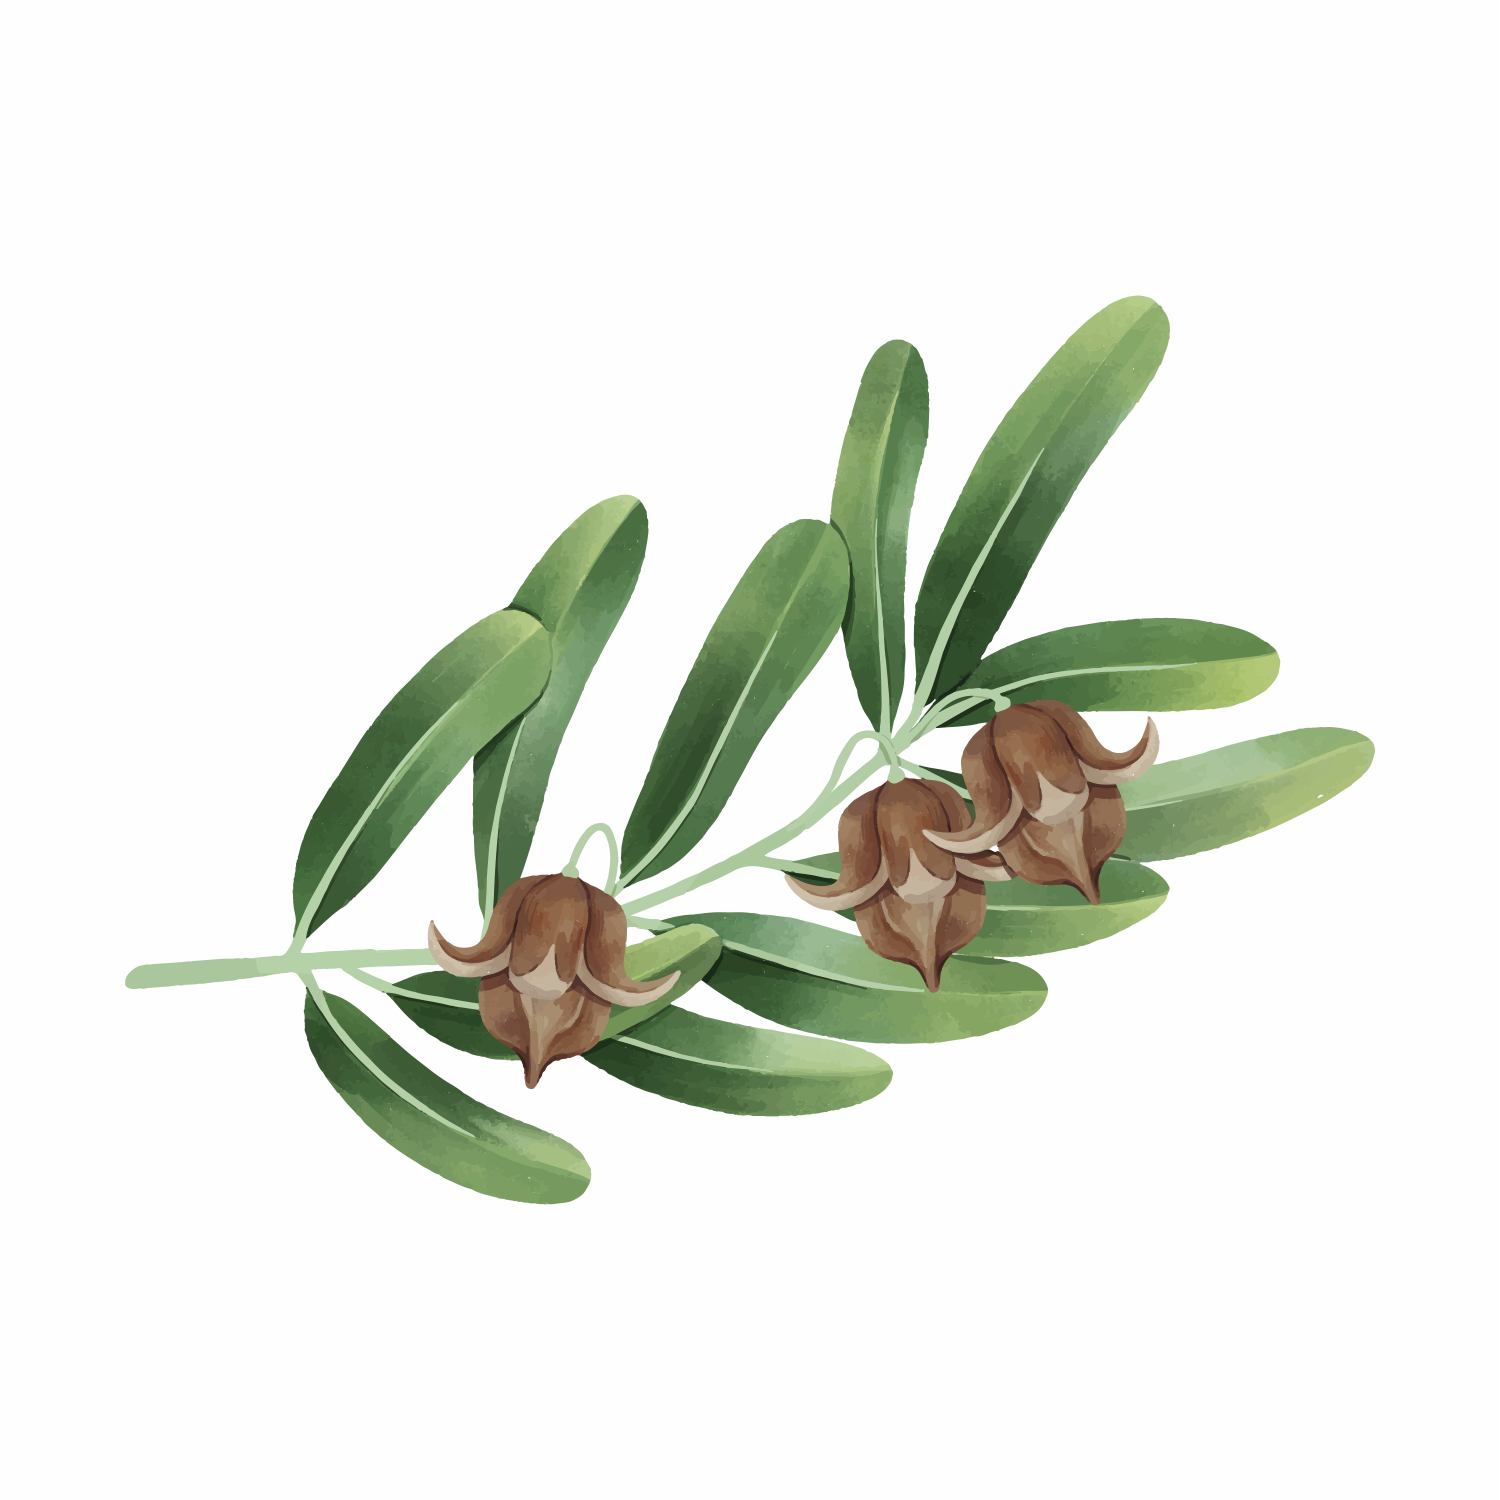 Simmondsia Chinensis (Jojoba) Seed Oil: Nature's Moisturizer for All Skin Types